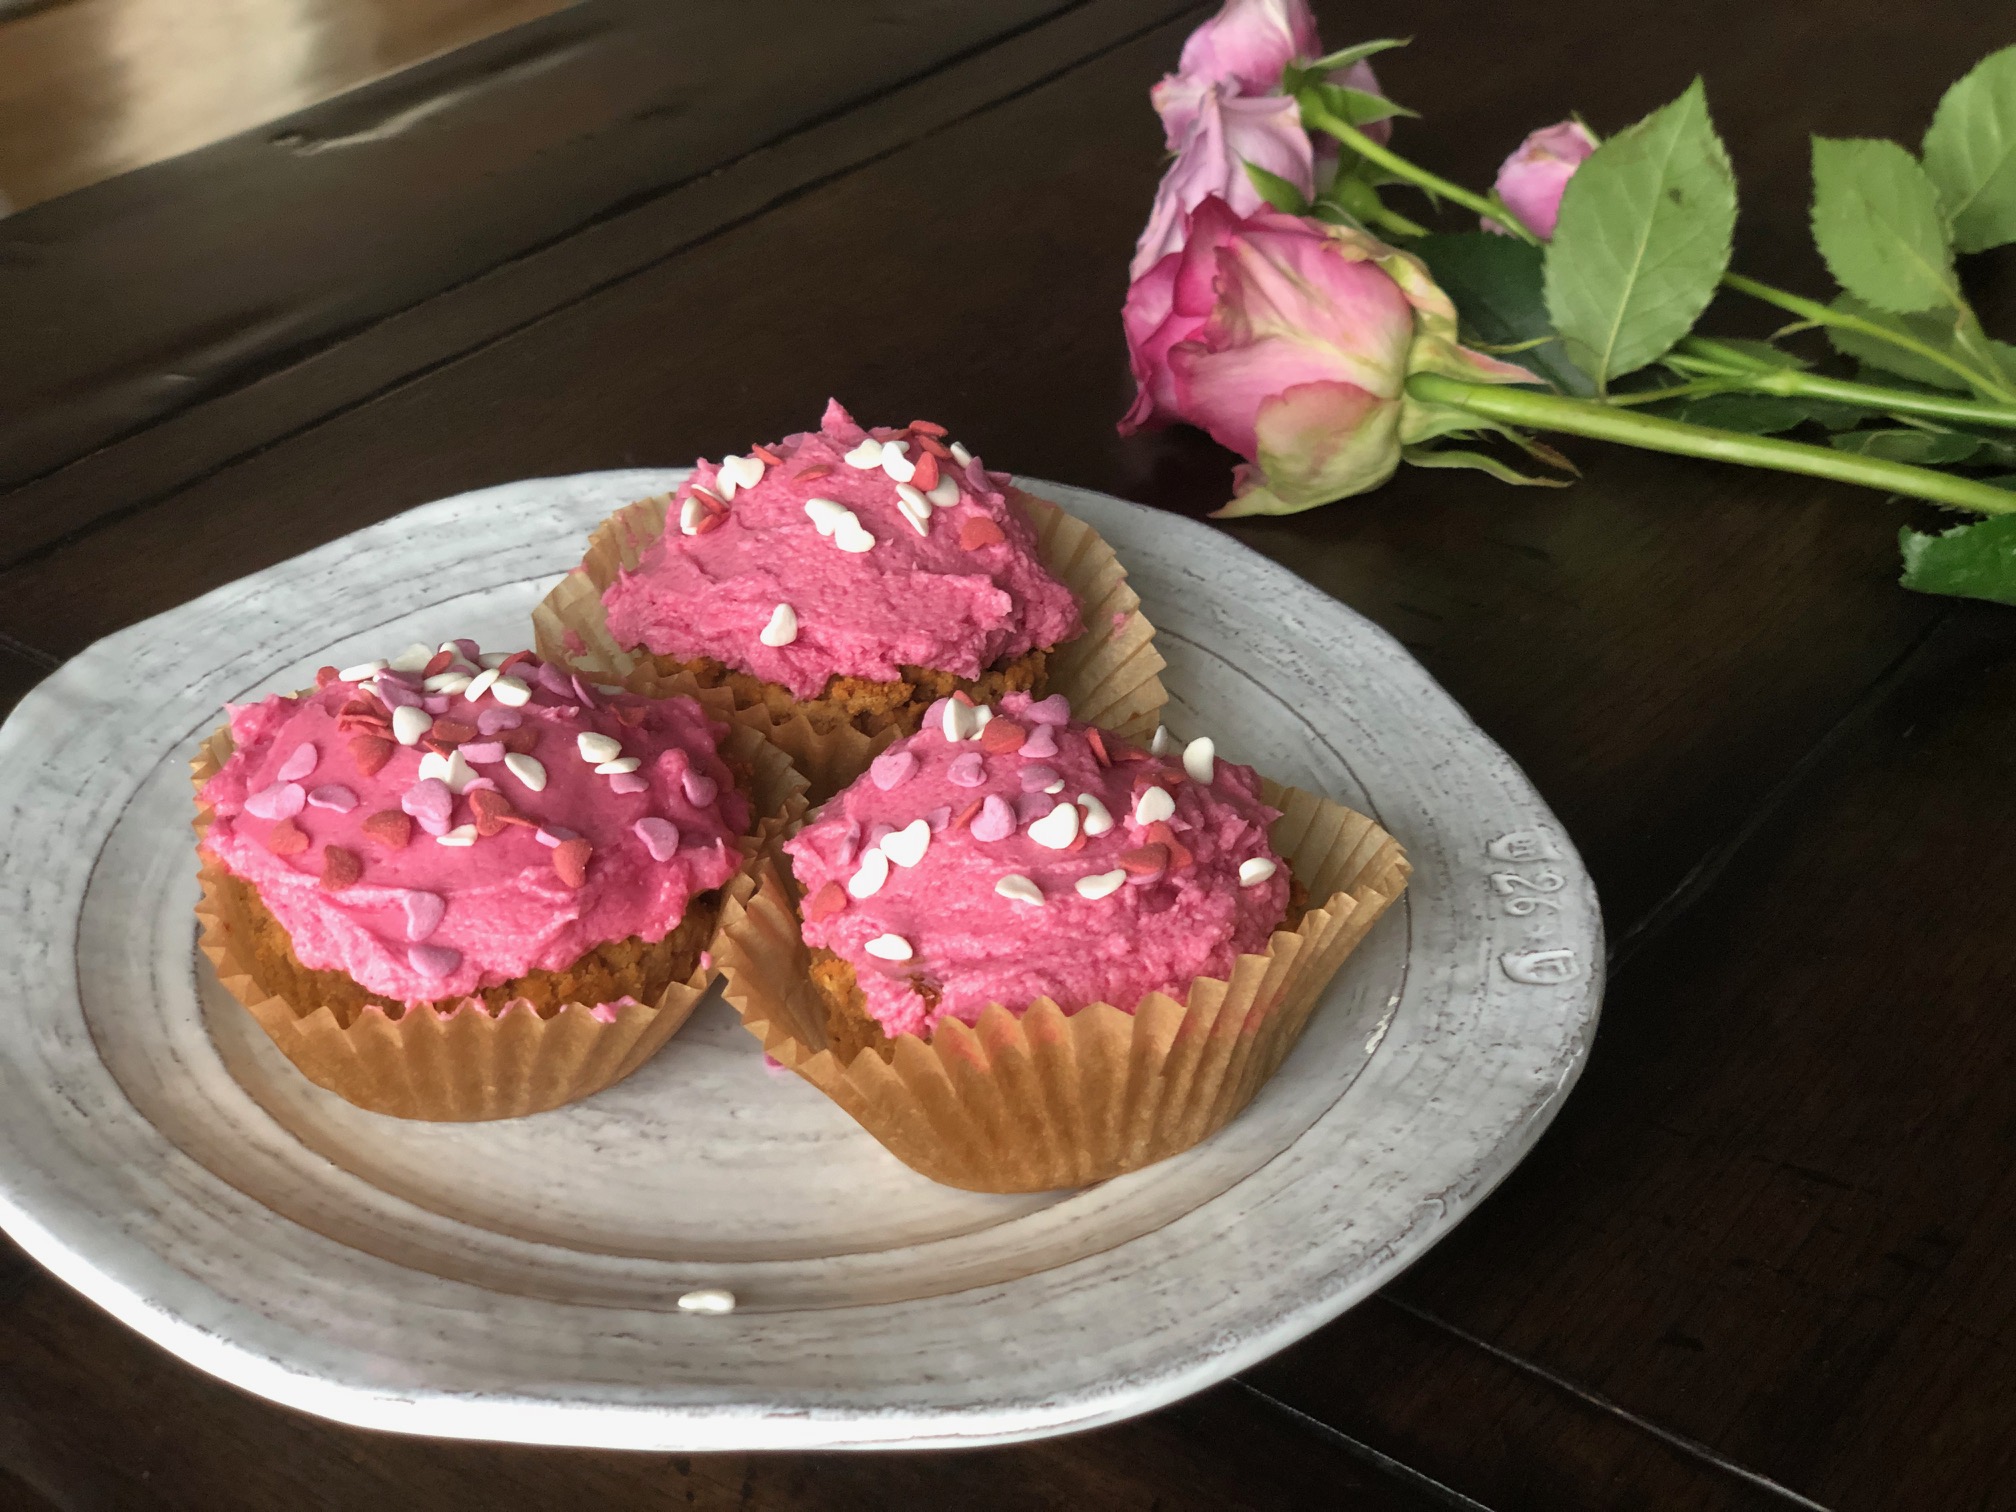 Paleo coconut flour vanilla cupcakes - grain free and vegan, these are moist and delicious cupcakes. Yum! #grainfree #vegantreat #glutenfreecupcake